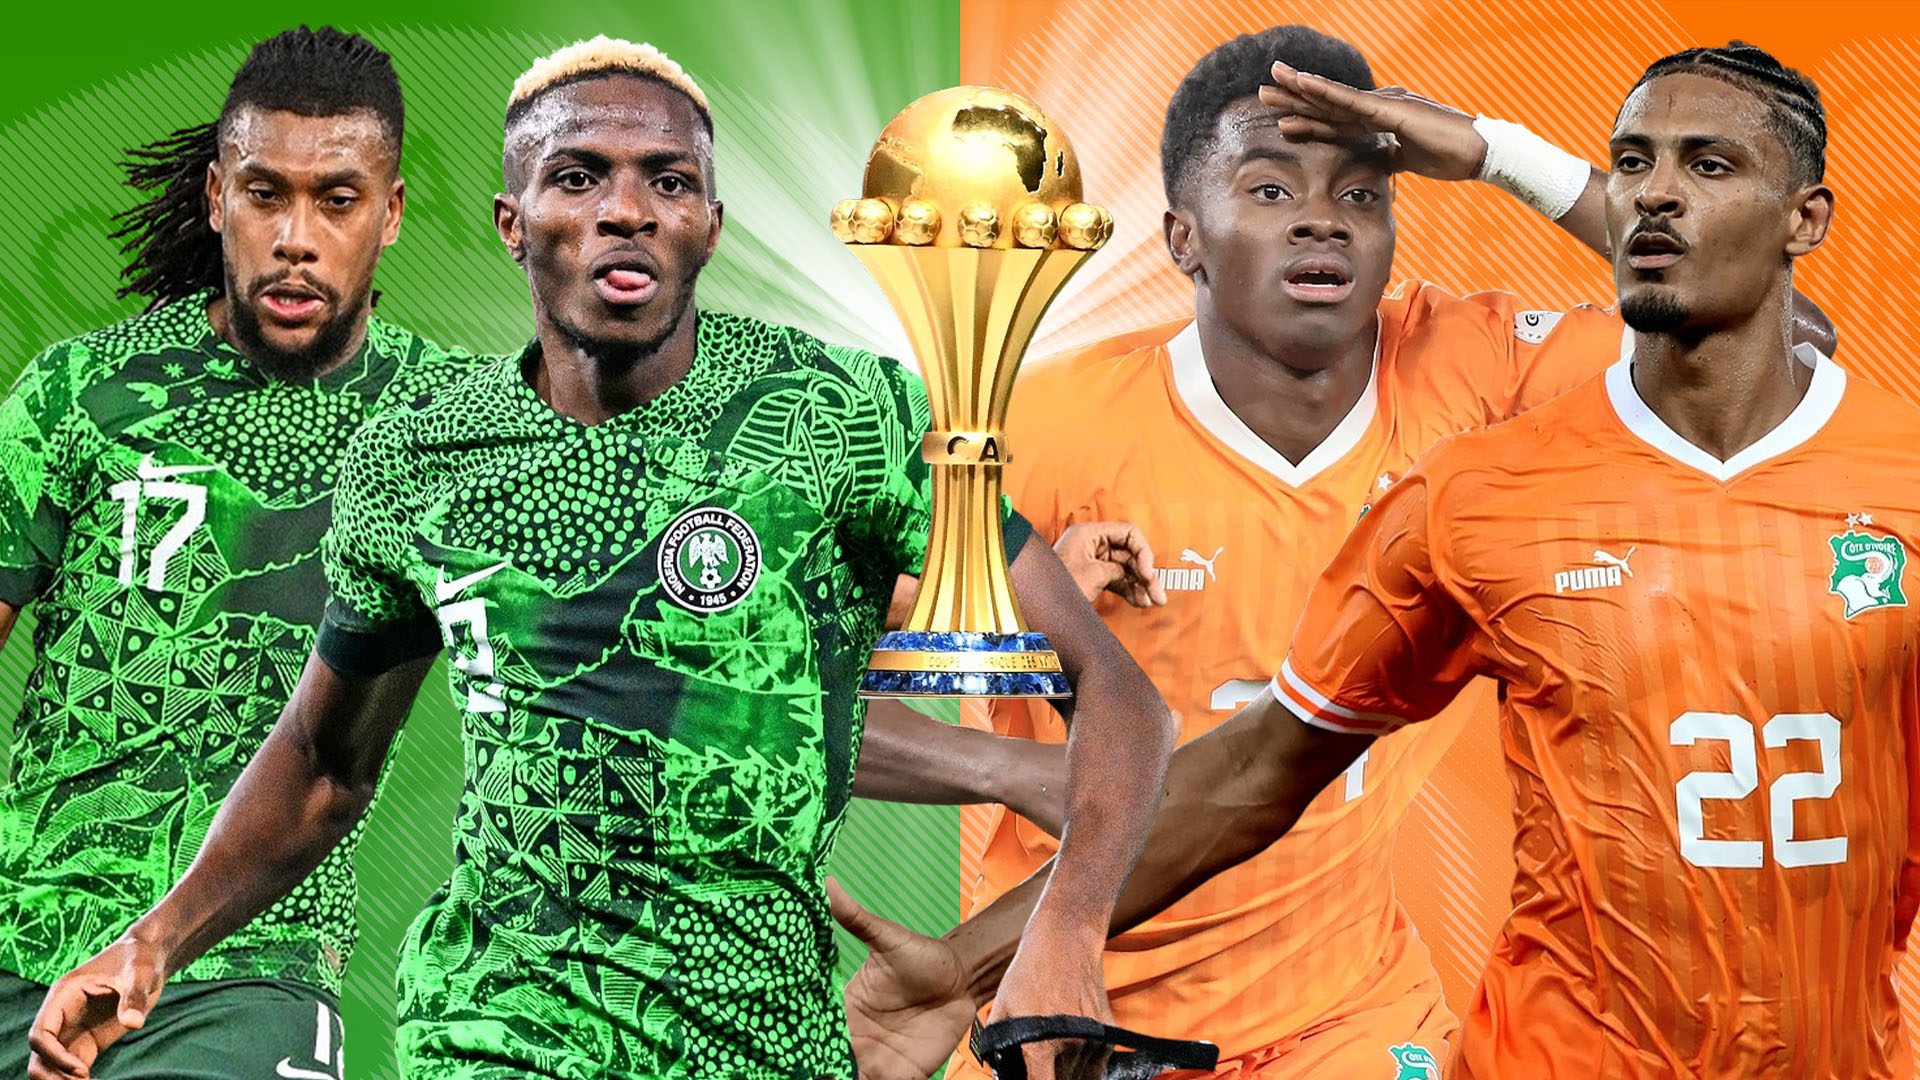 FMTBLOG PREDICT & WIN- Nigeria vs Cote D’Ivoire – Predict The Correct Scores (Cash Prizes)